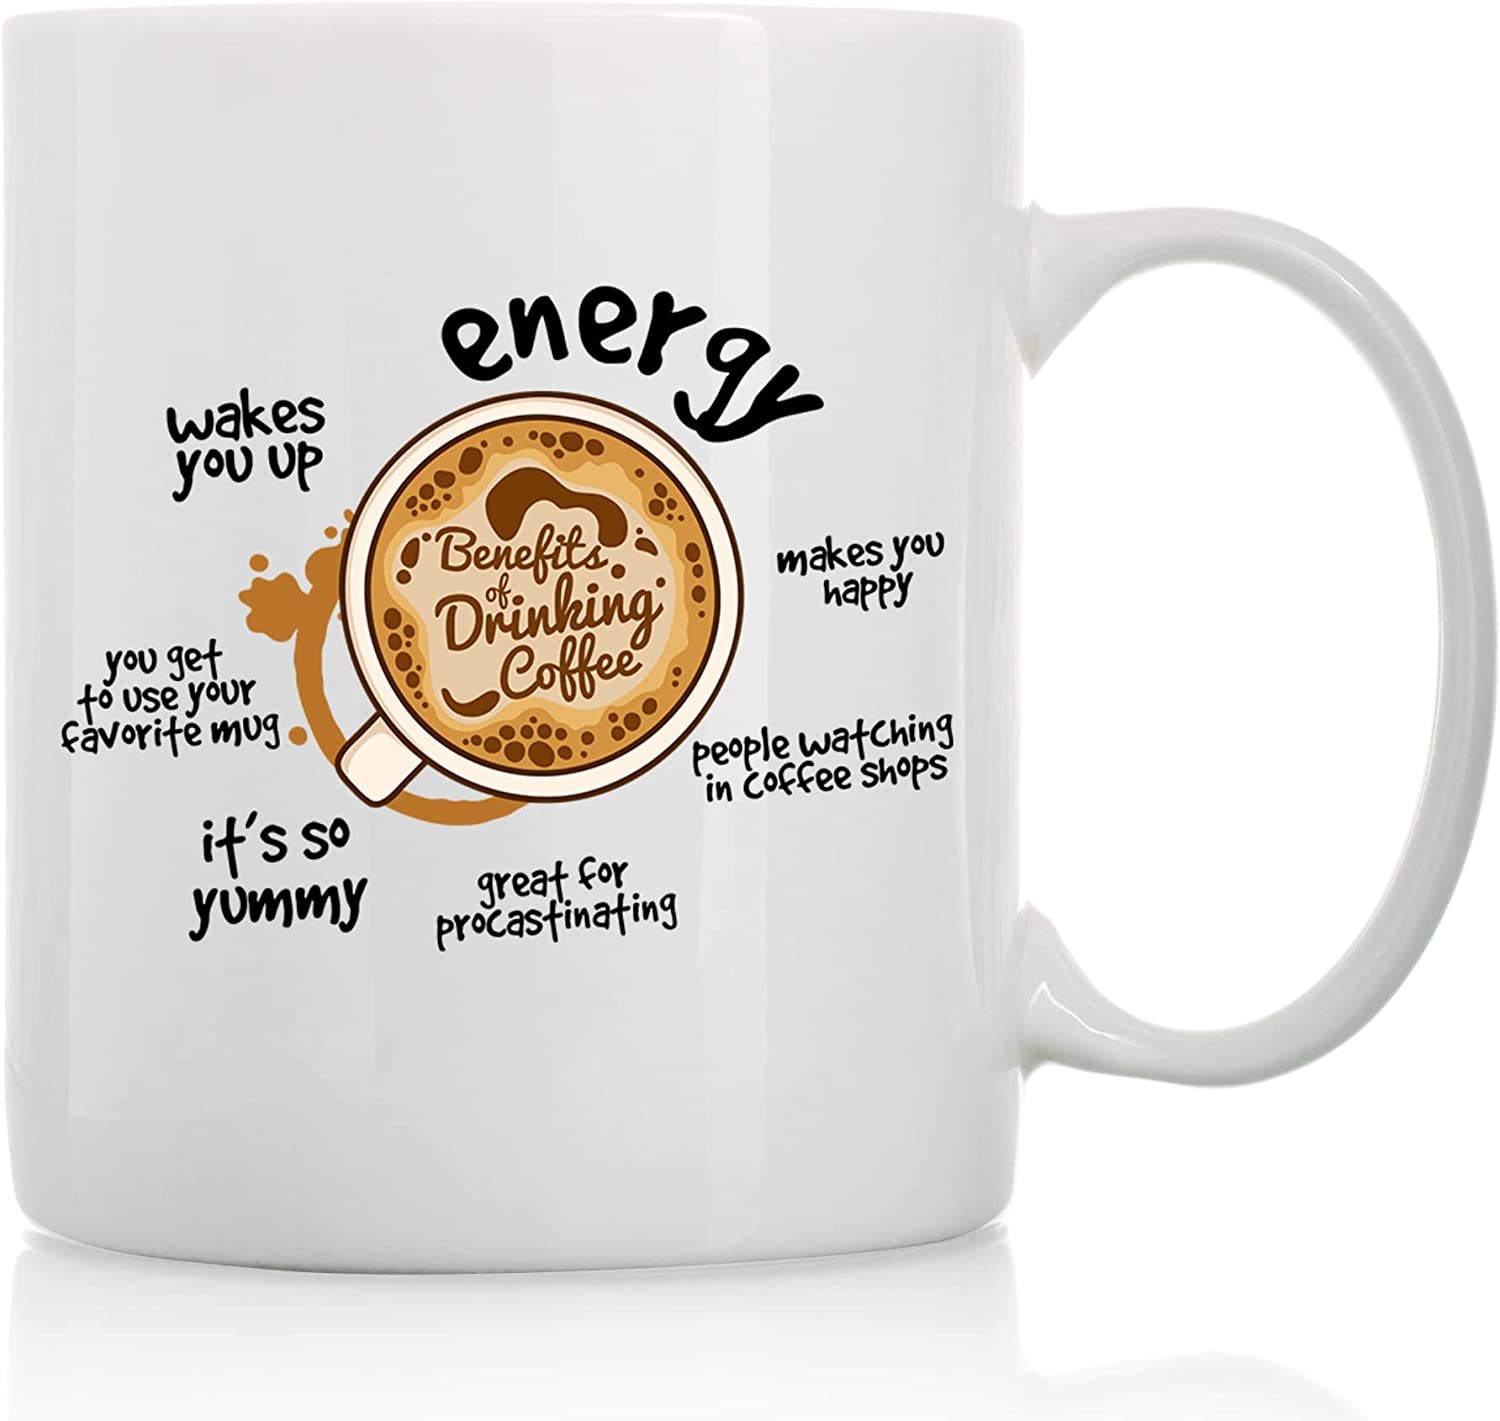 Coffee Benefits Mug - 11oz and 15oz Funny Coffee Mugs - The Best